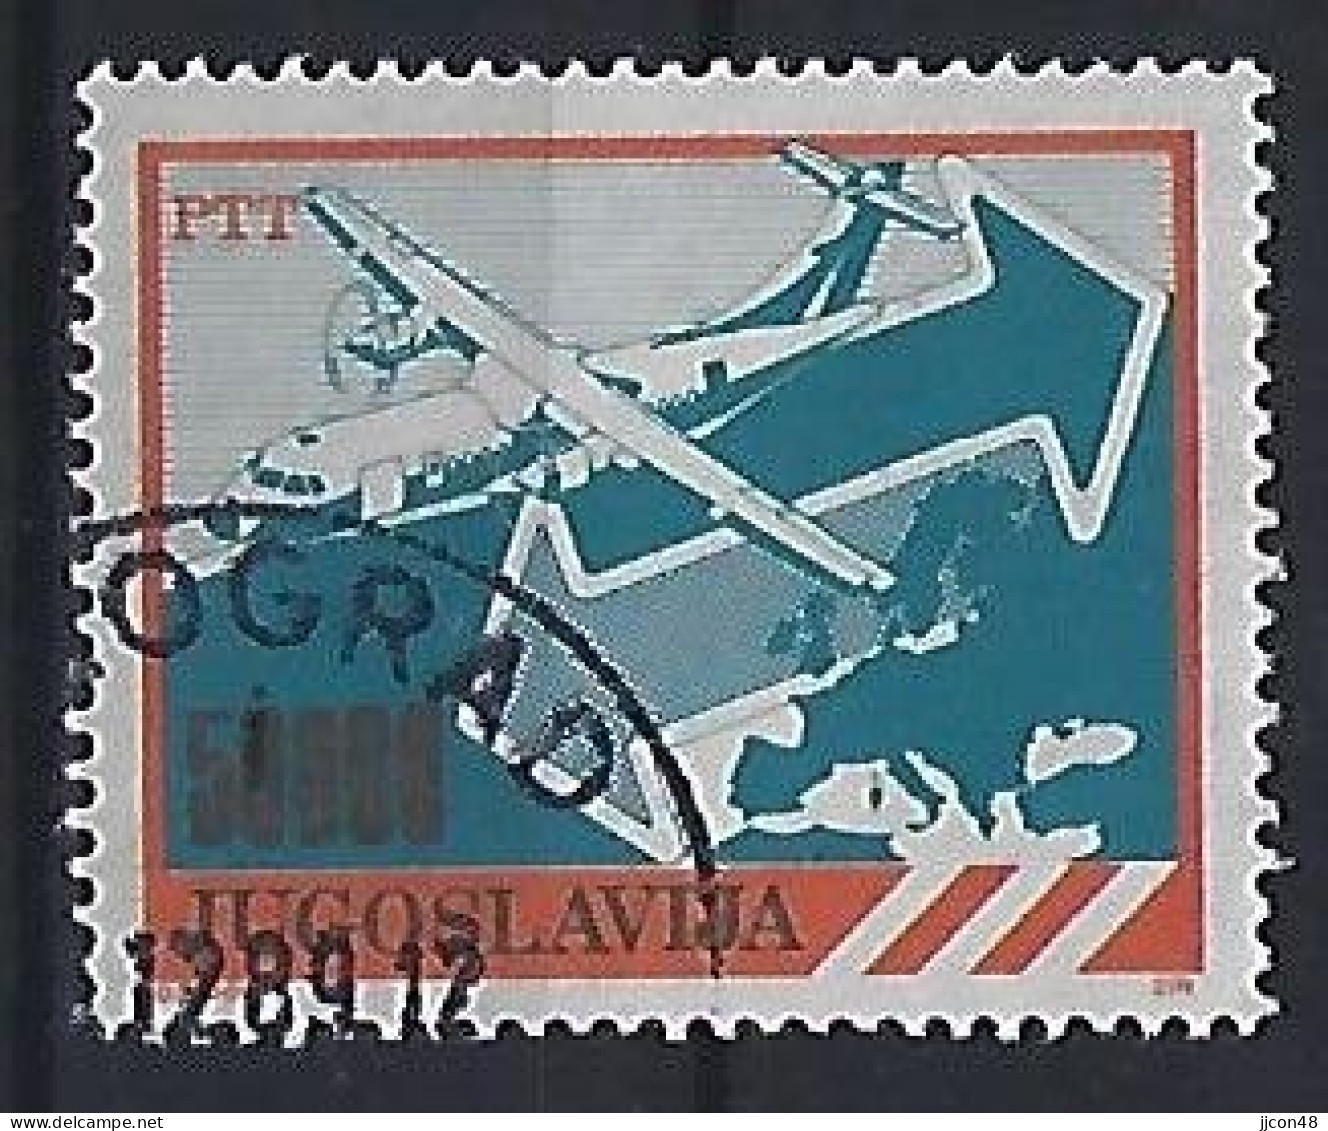 Jugoslavia 1989  Postdienst (o) Mi.2384 - Usados